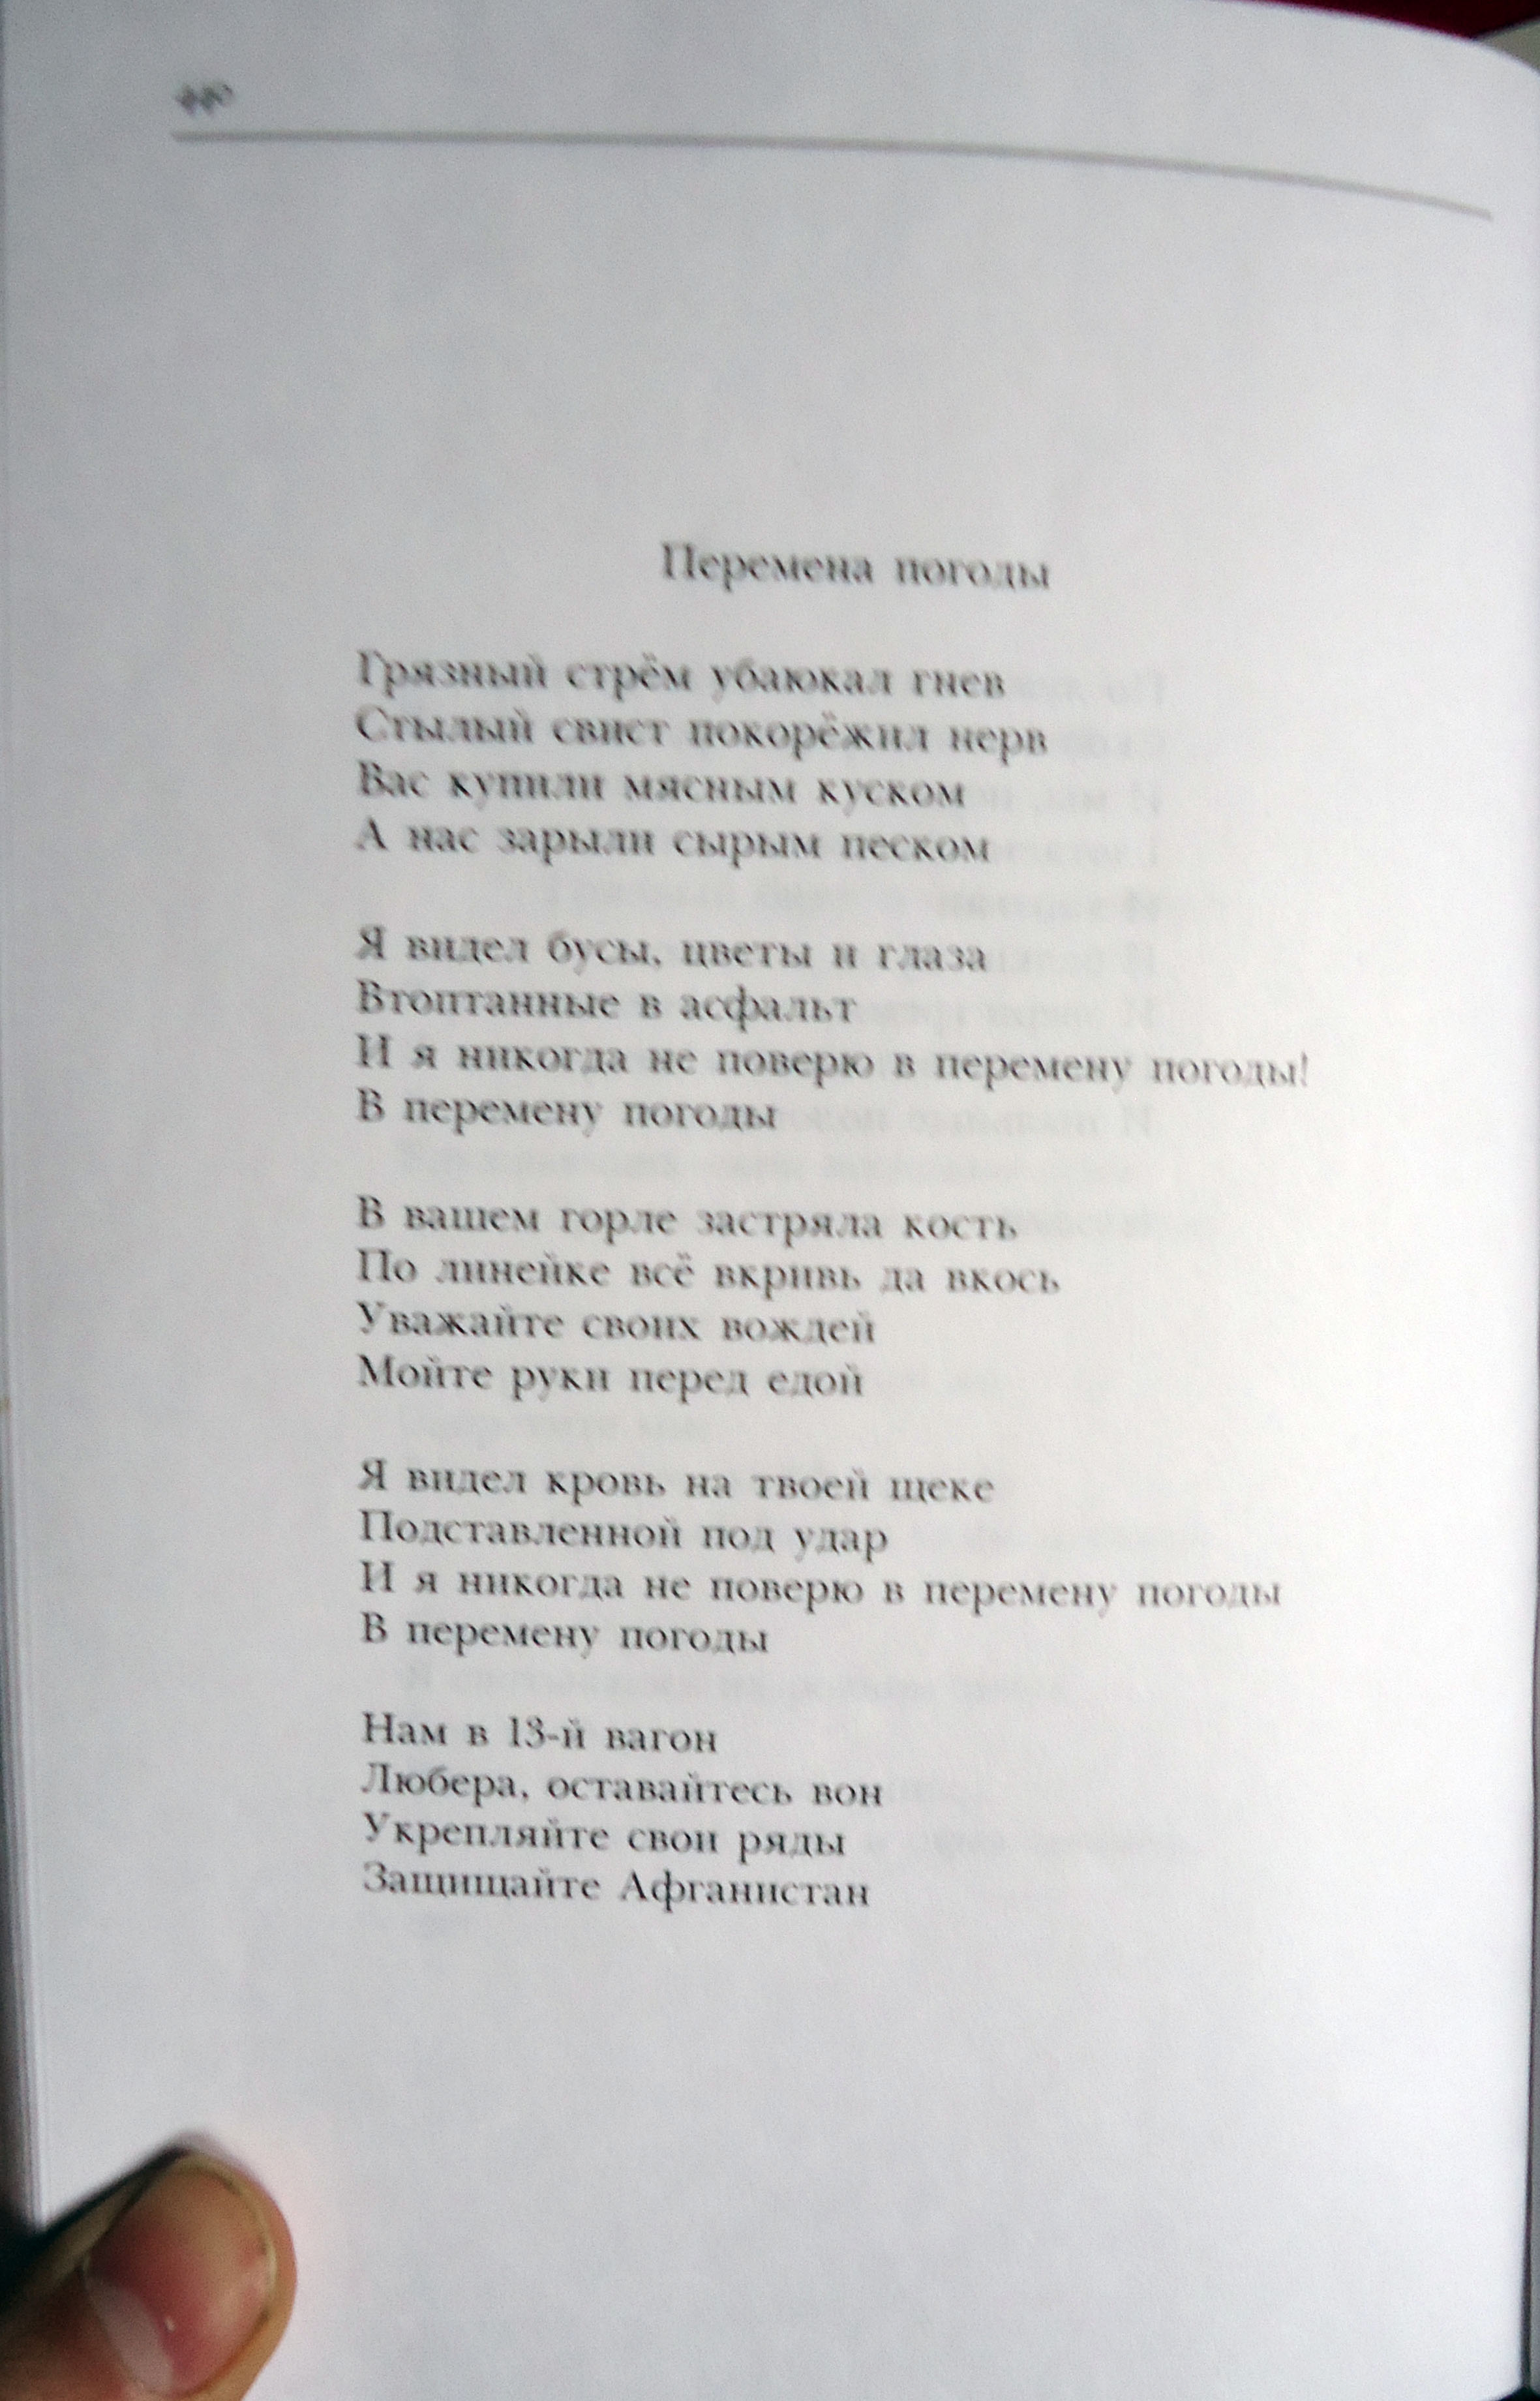 Перемена погоды (Change of weather) Lyrics | prachka-mira.ru